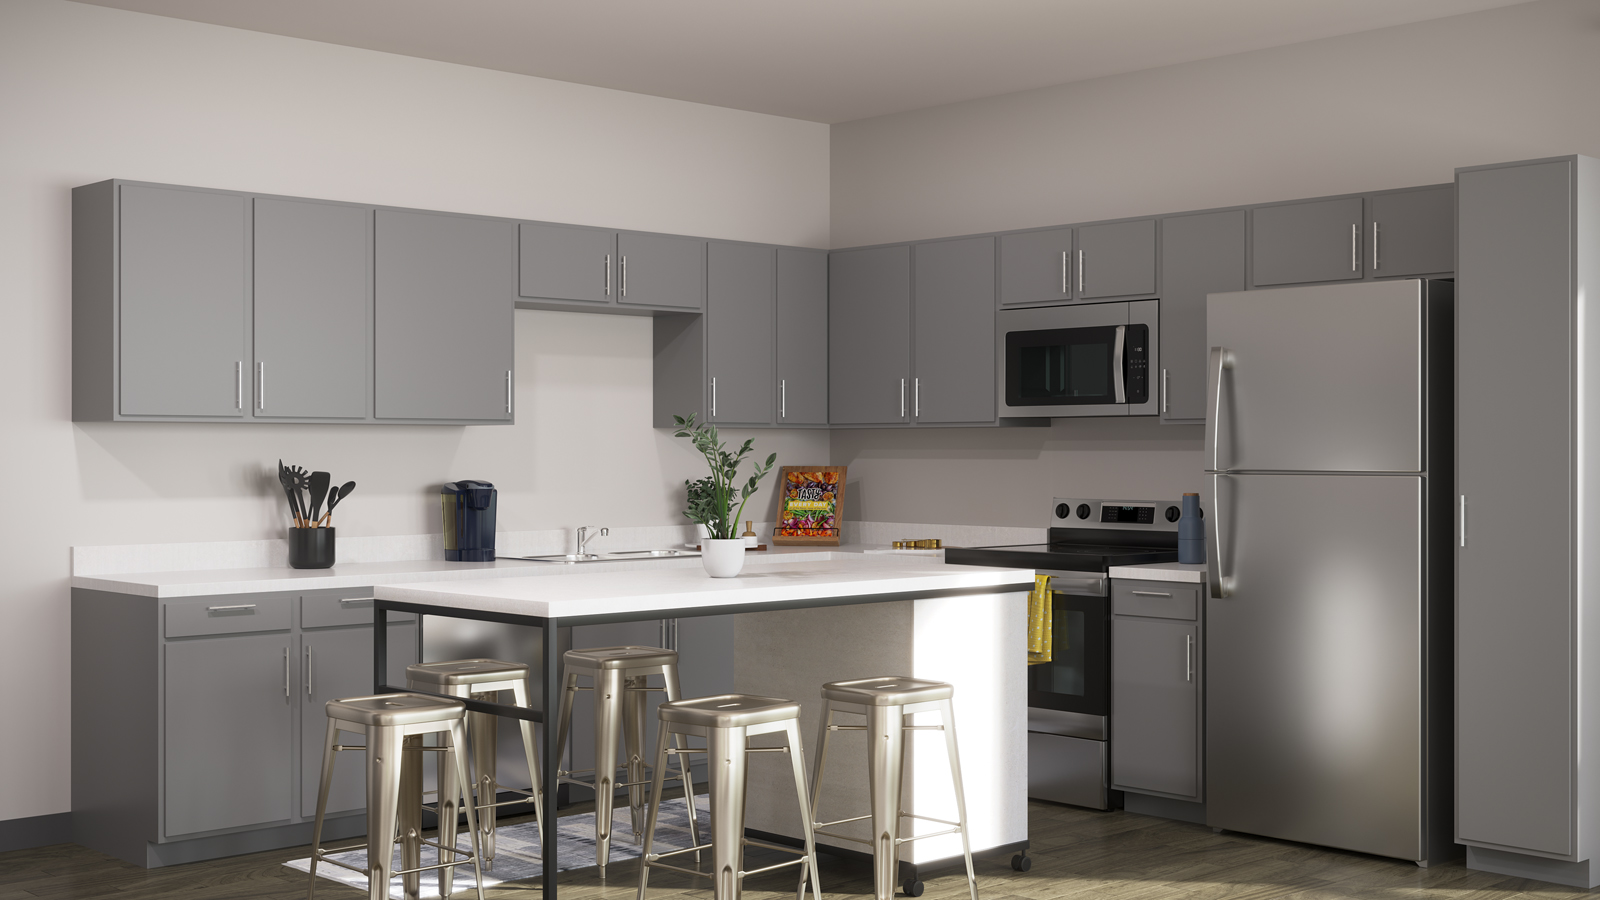 E1 Furnished apartment kitchen